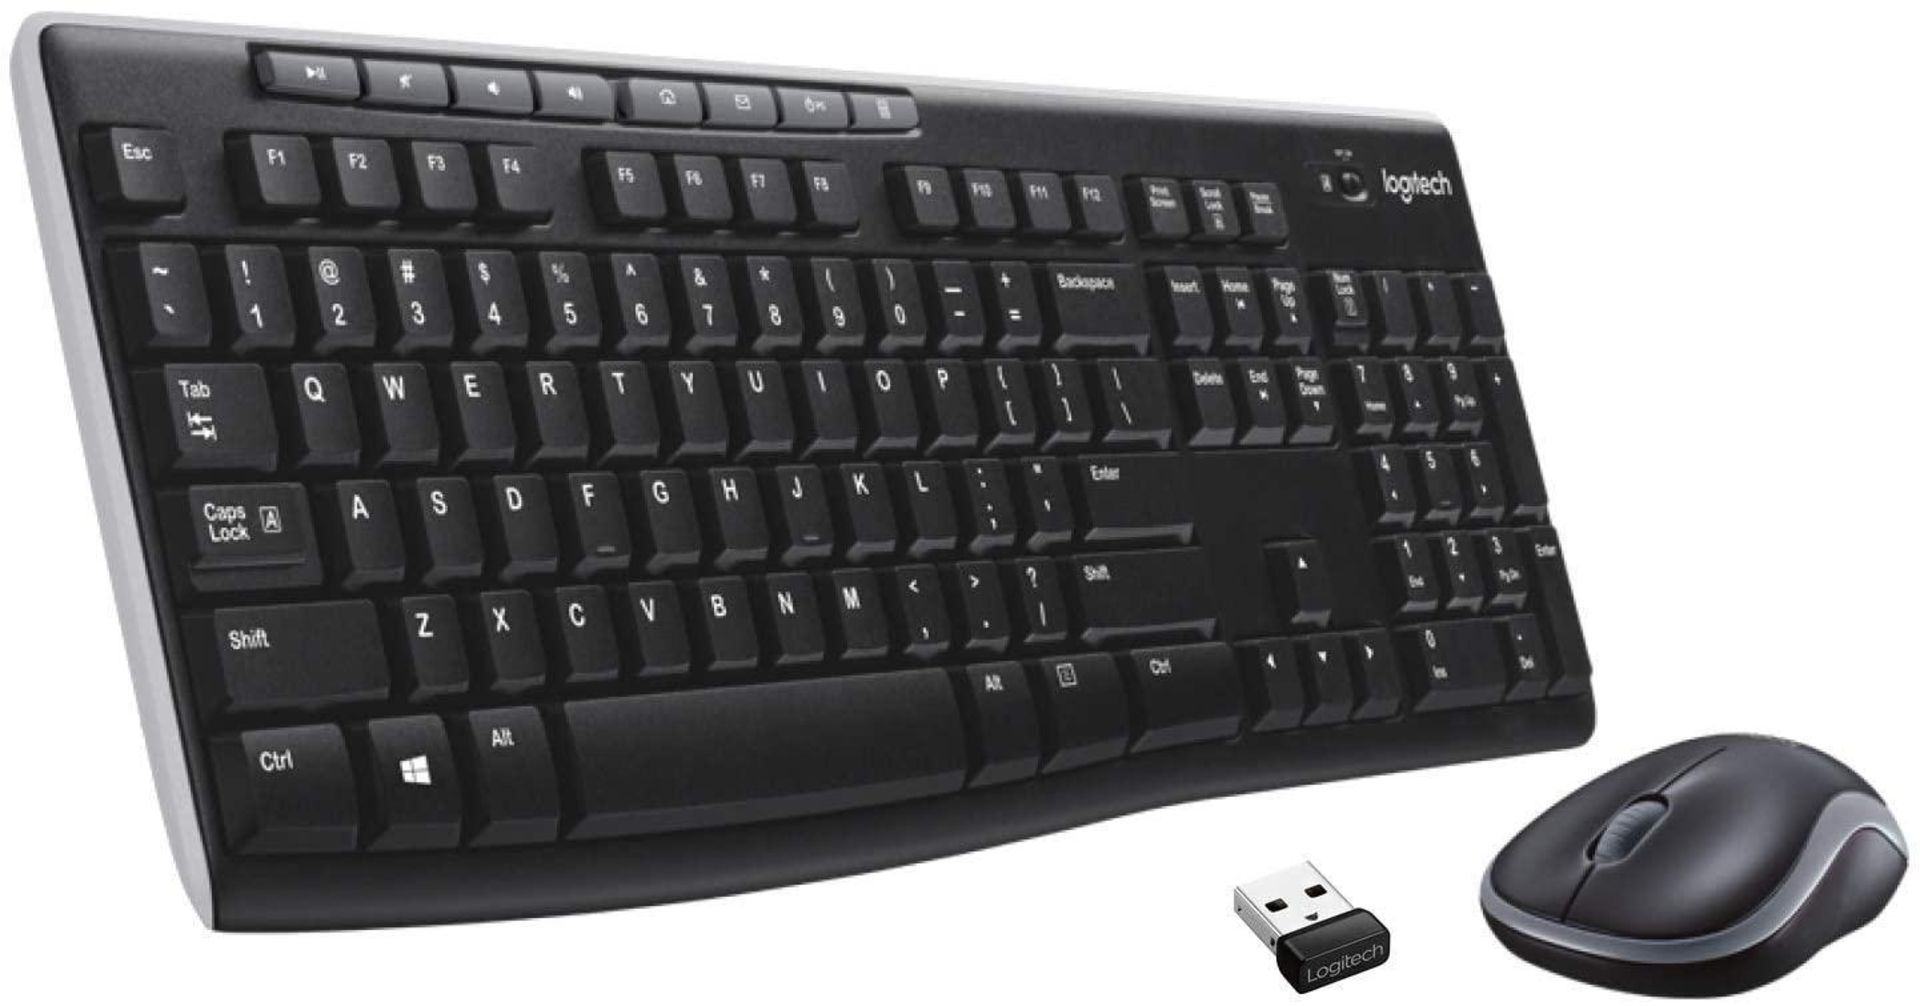 Logitech MK270 Wireless Mouse and Keyboard £24.99 RRP